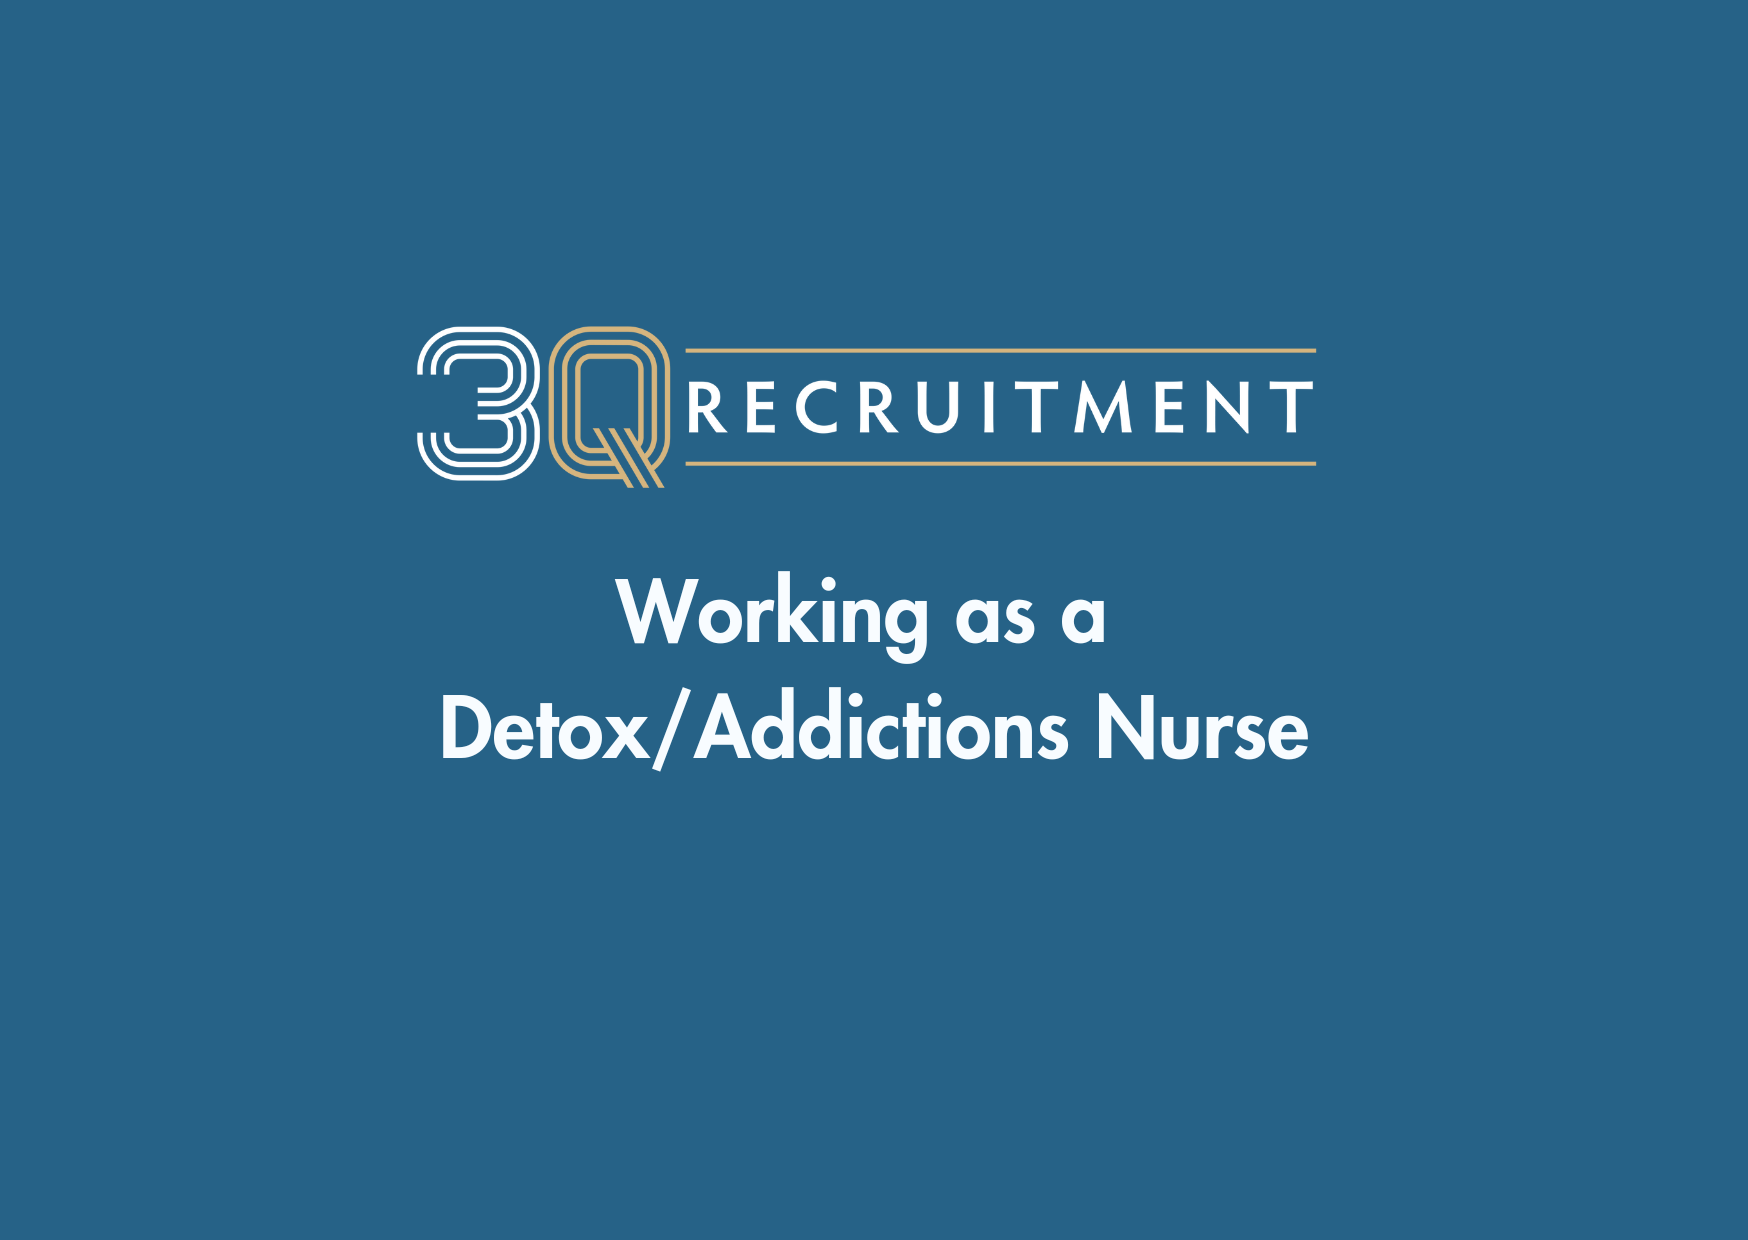 3Q Recruitment Working as a Detox/Addictions Nurse